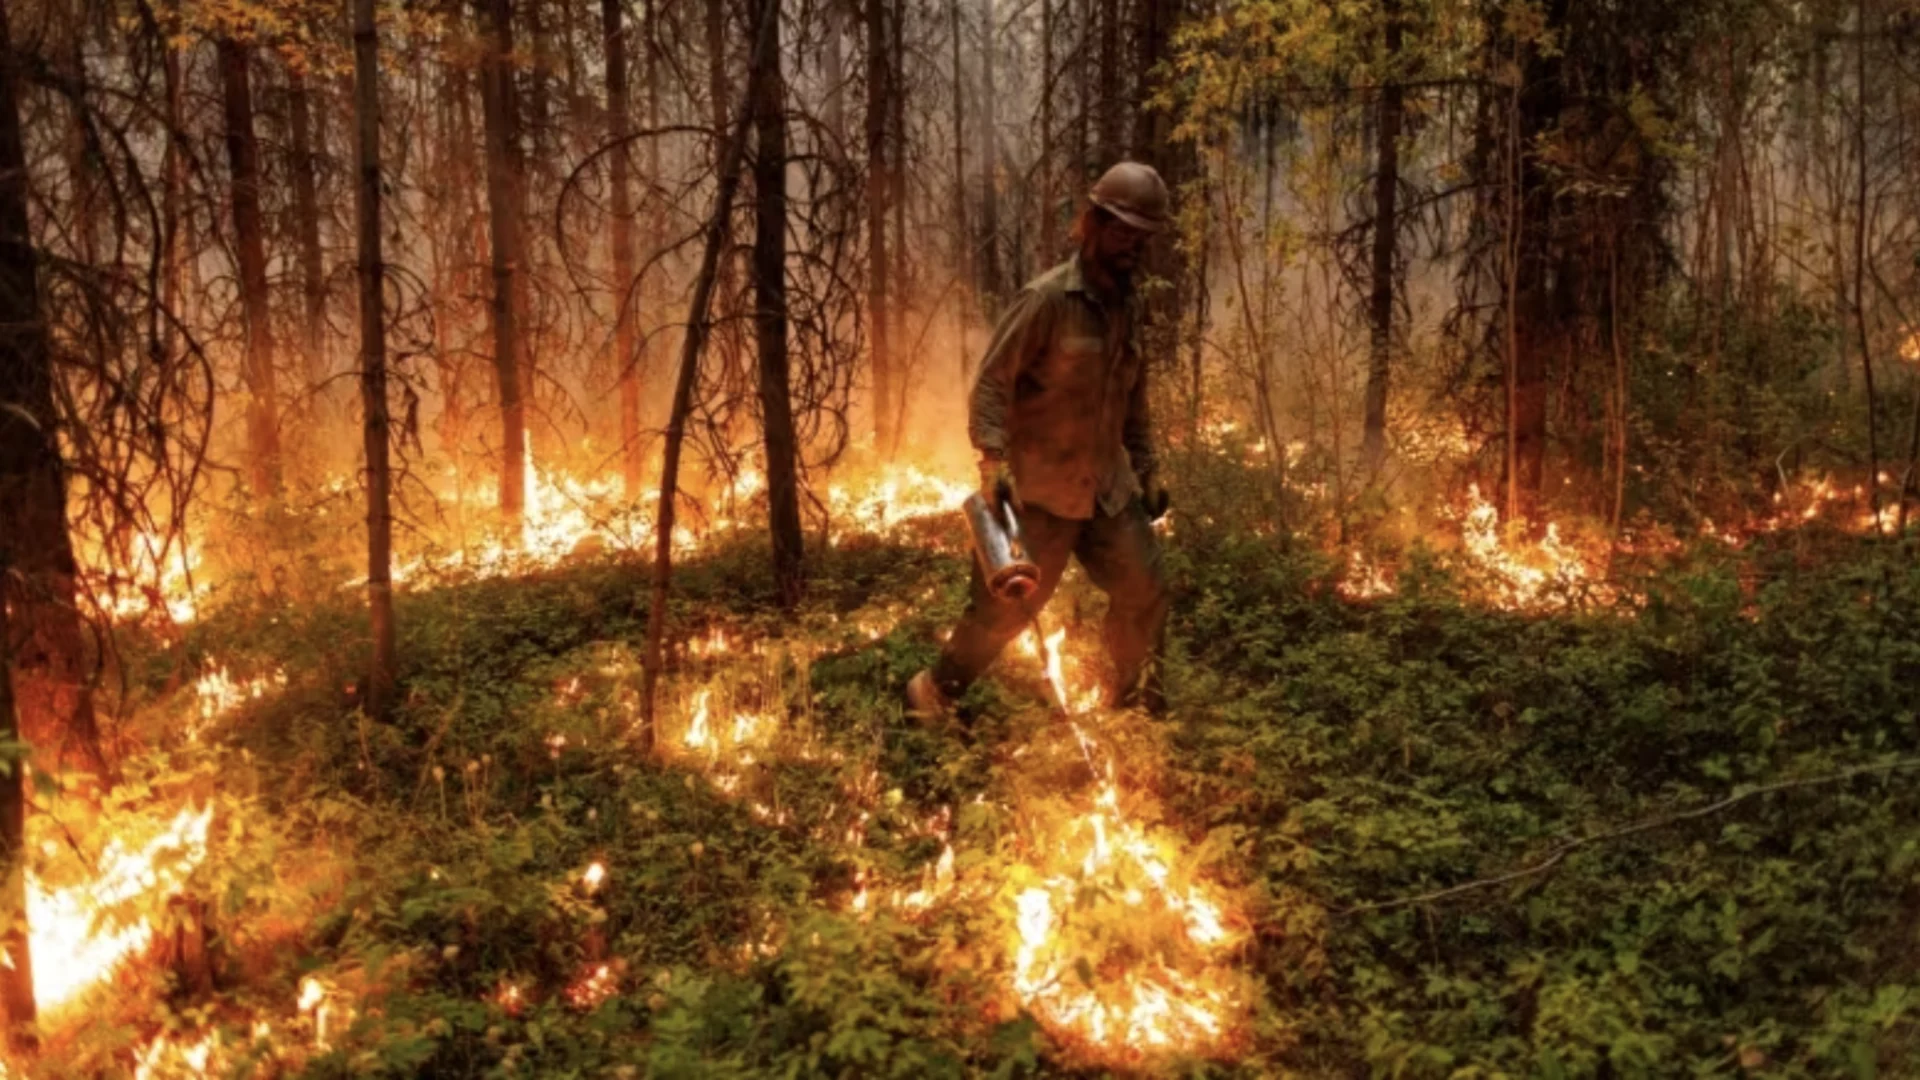 Unprecedented fire year: experts warn of longer, more destructive seasons